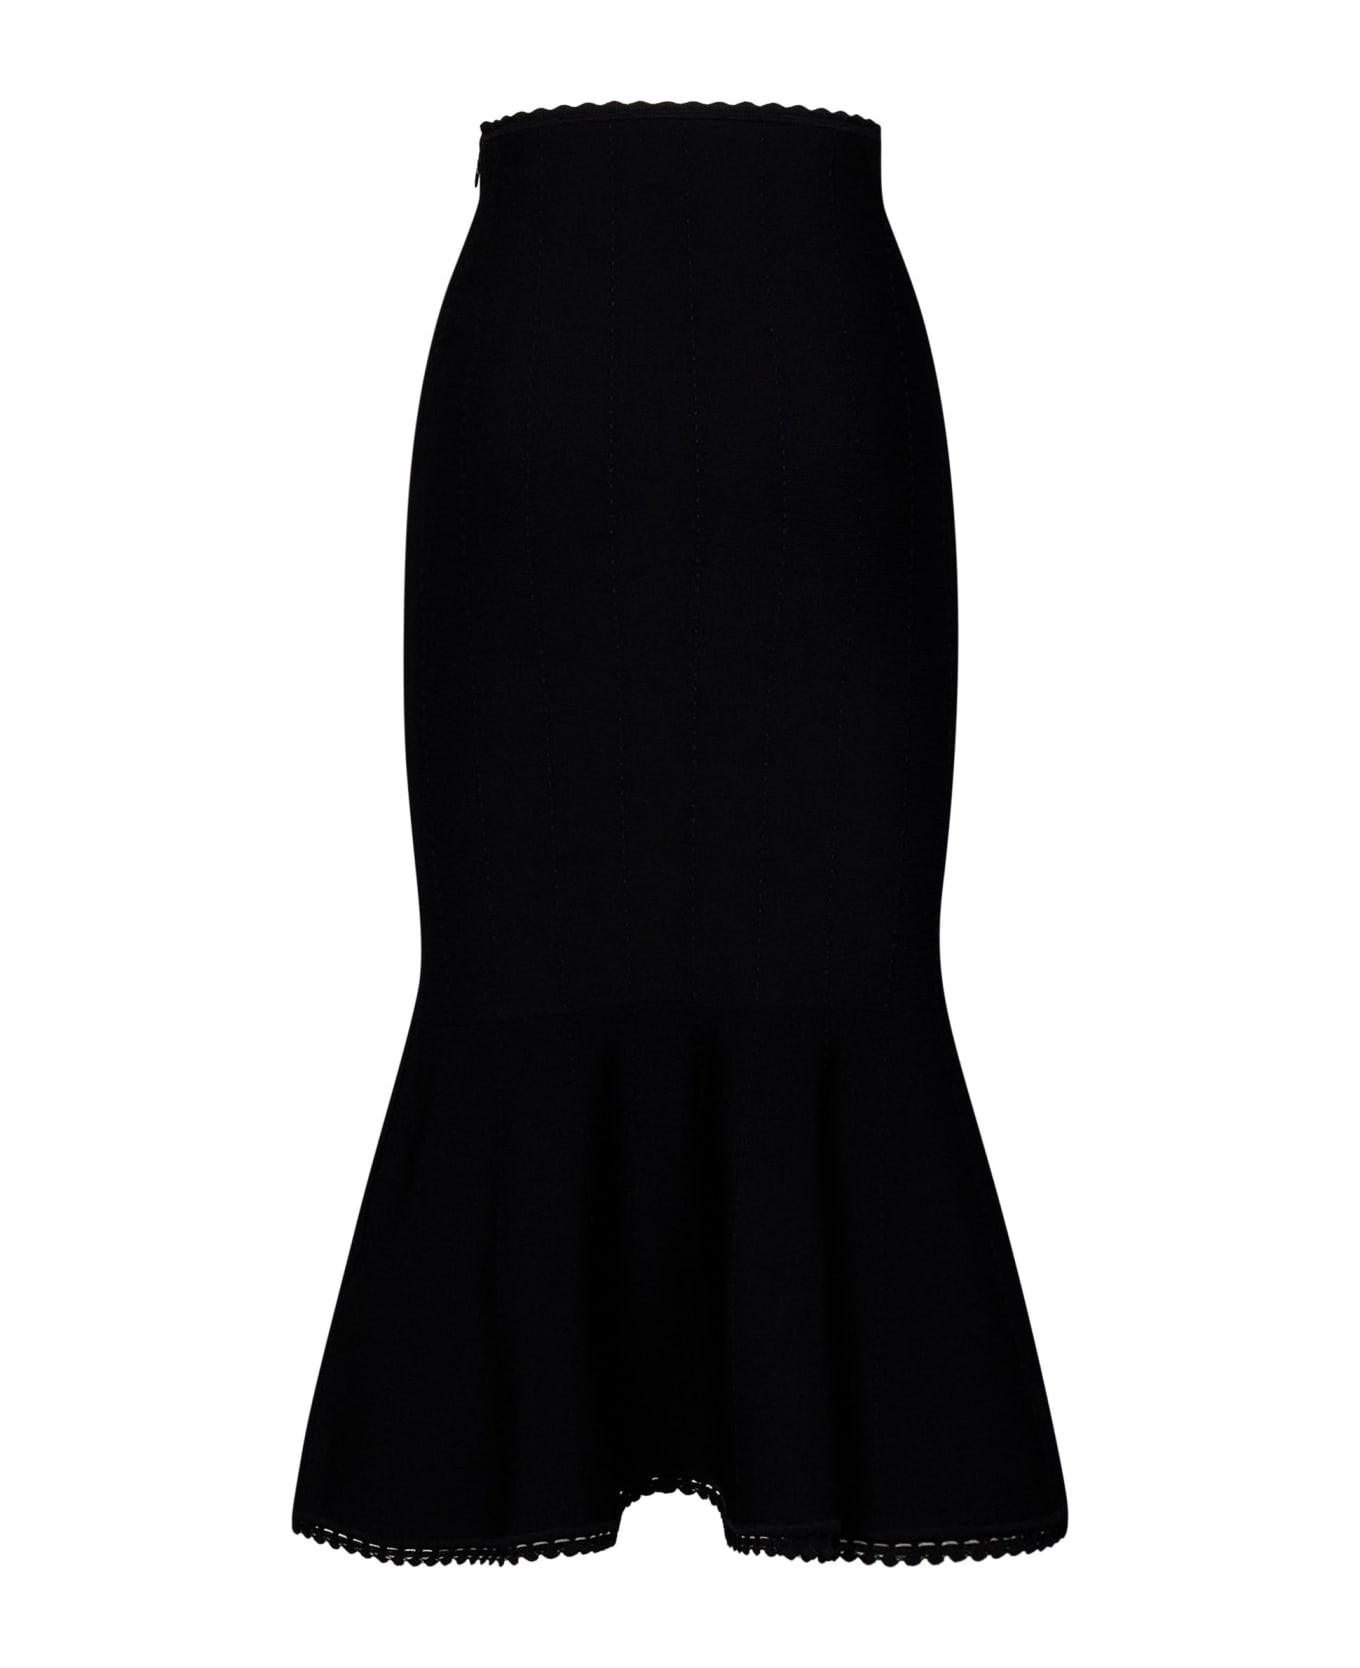 Victoria Beckham Vb Body Skirt - Black スカート